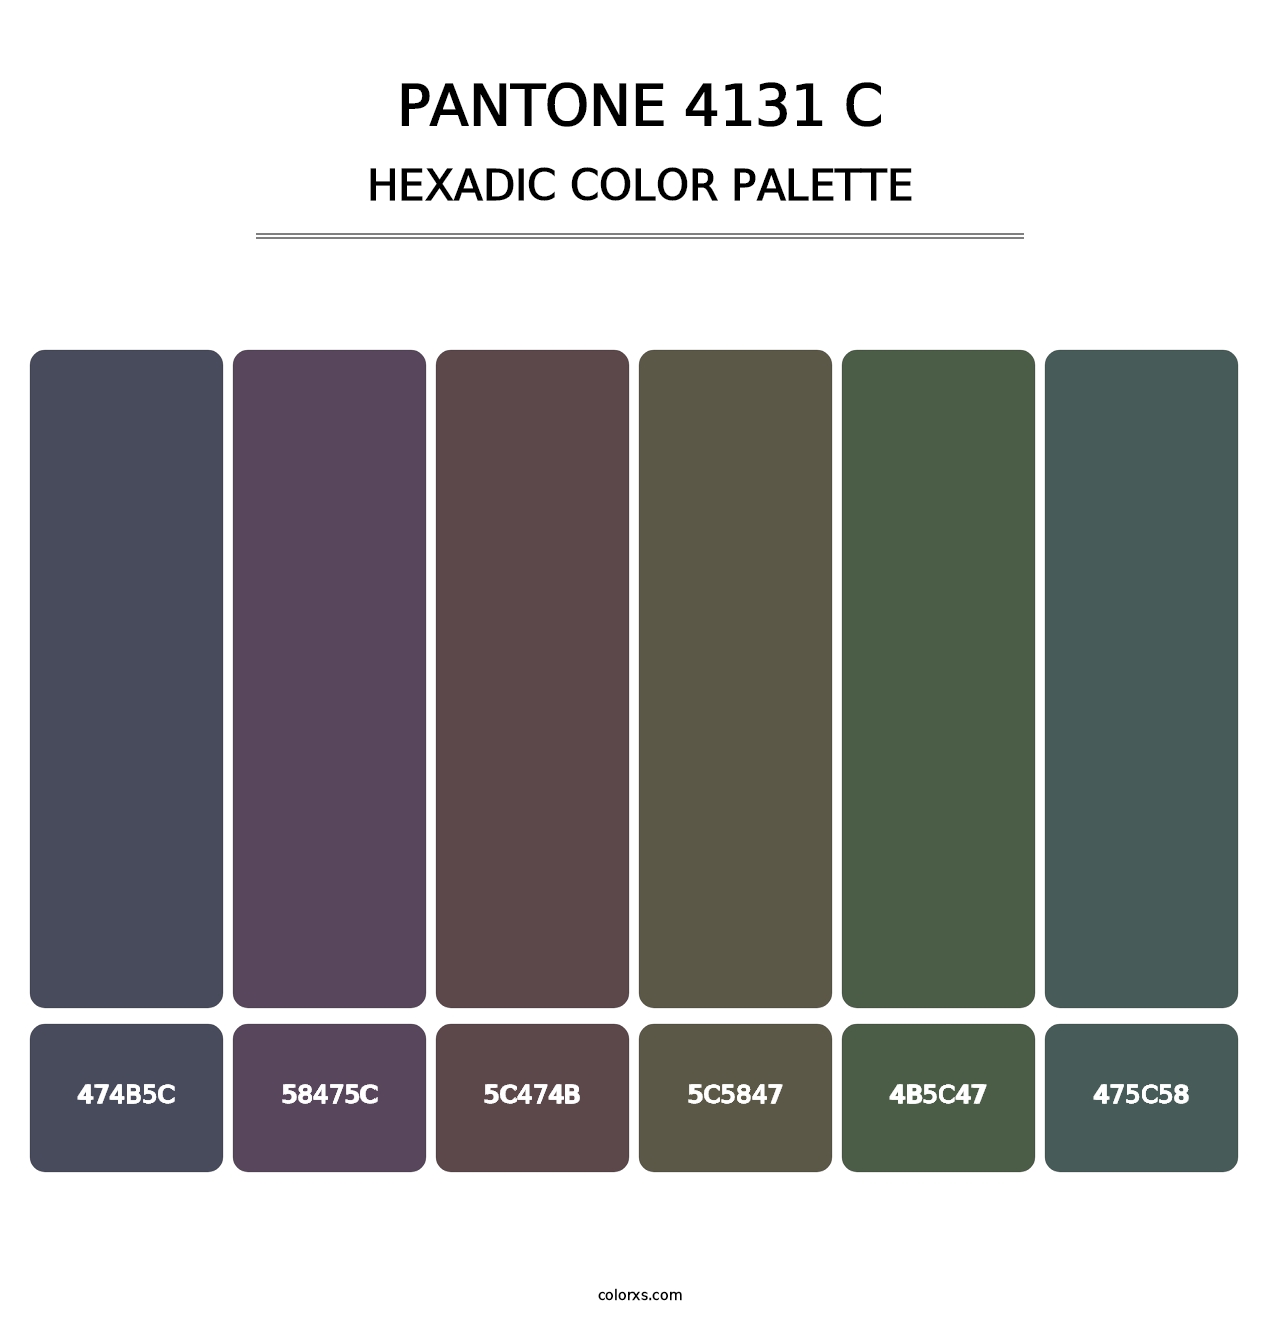 PANTONE 4131 C - Hexadic Color Palette